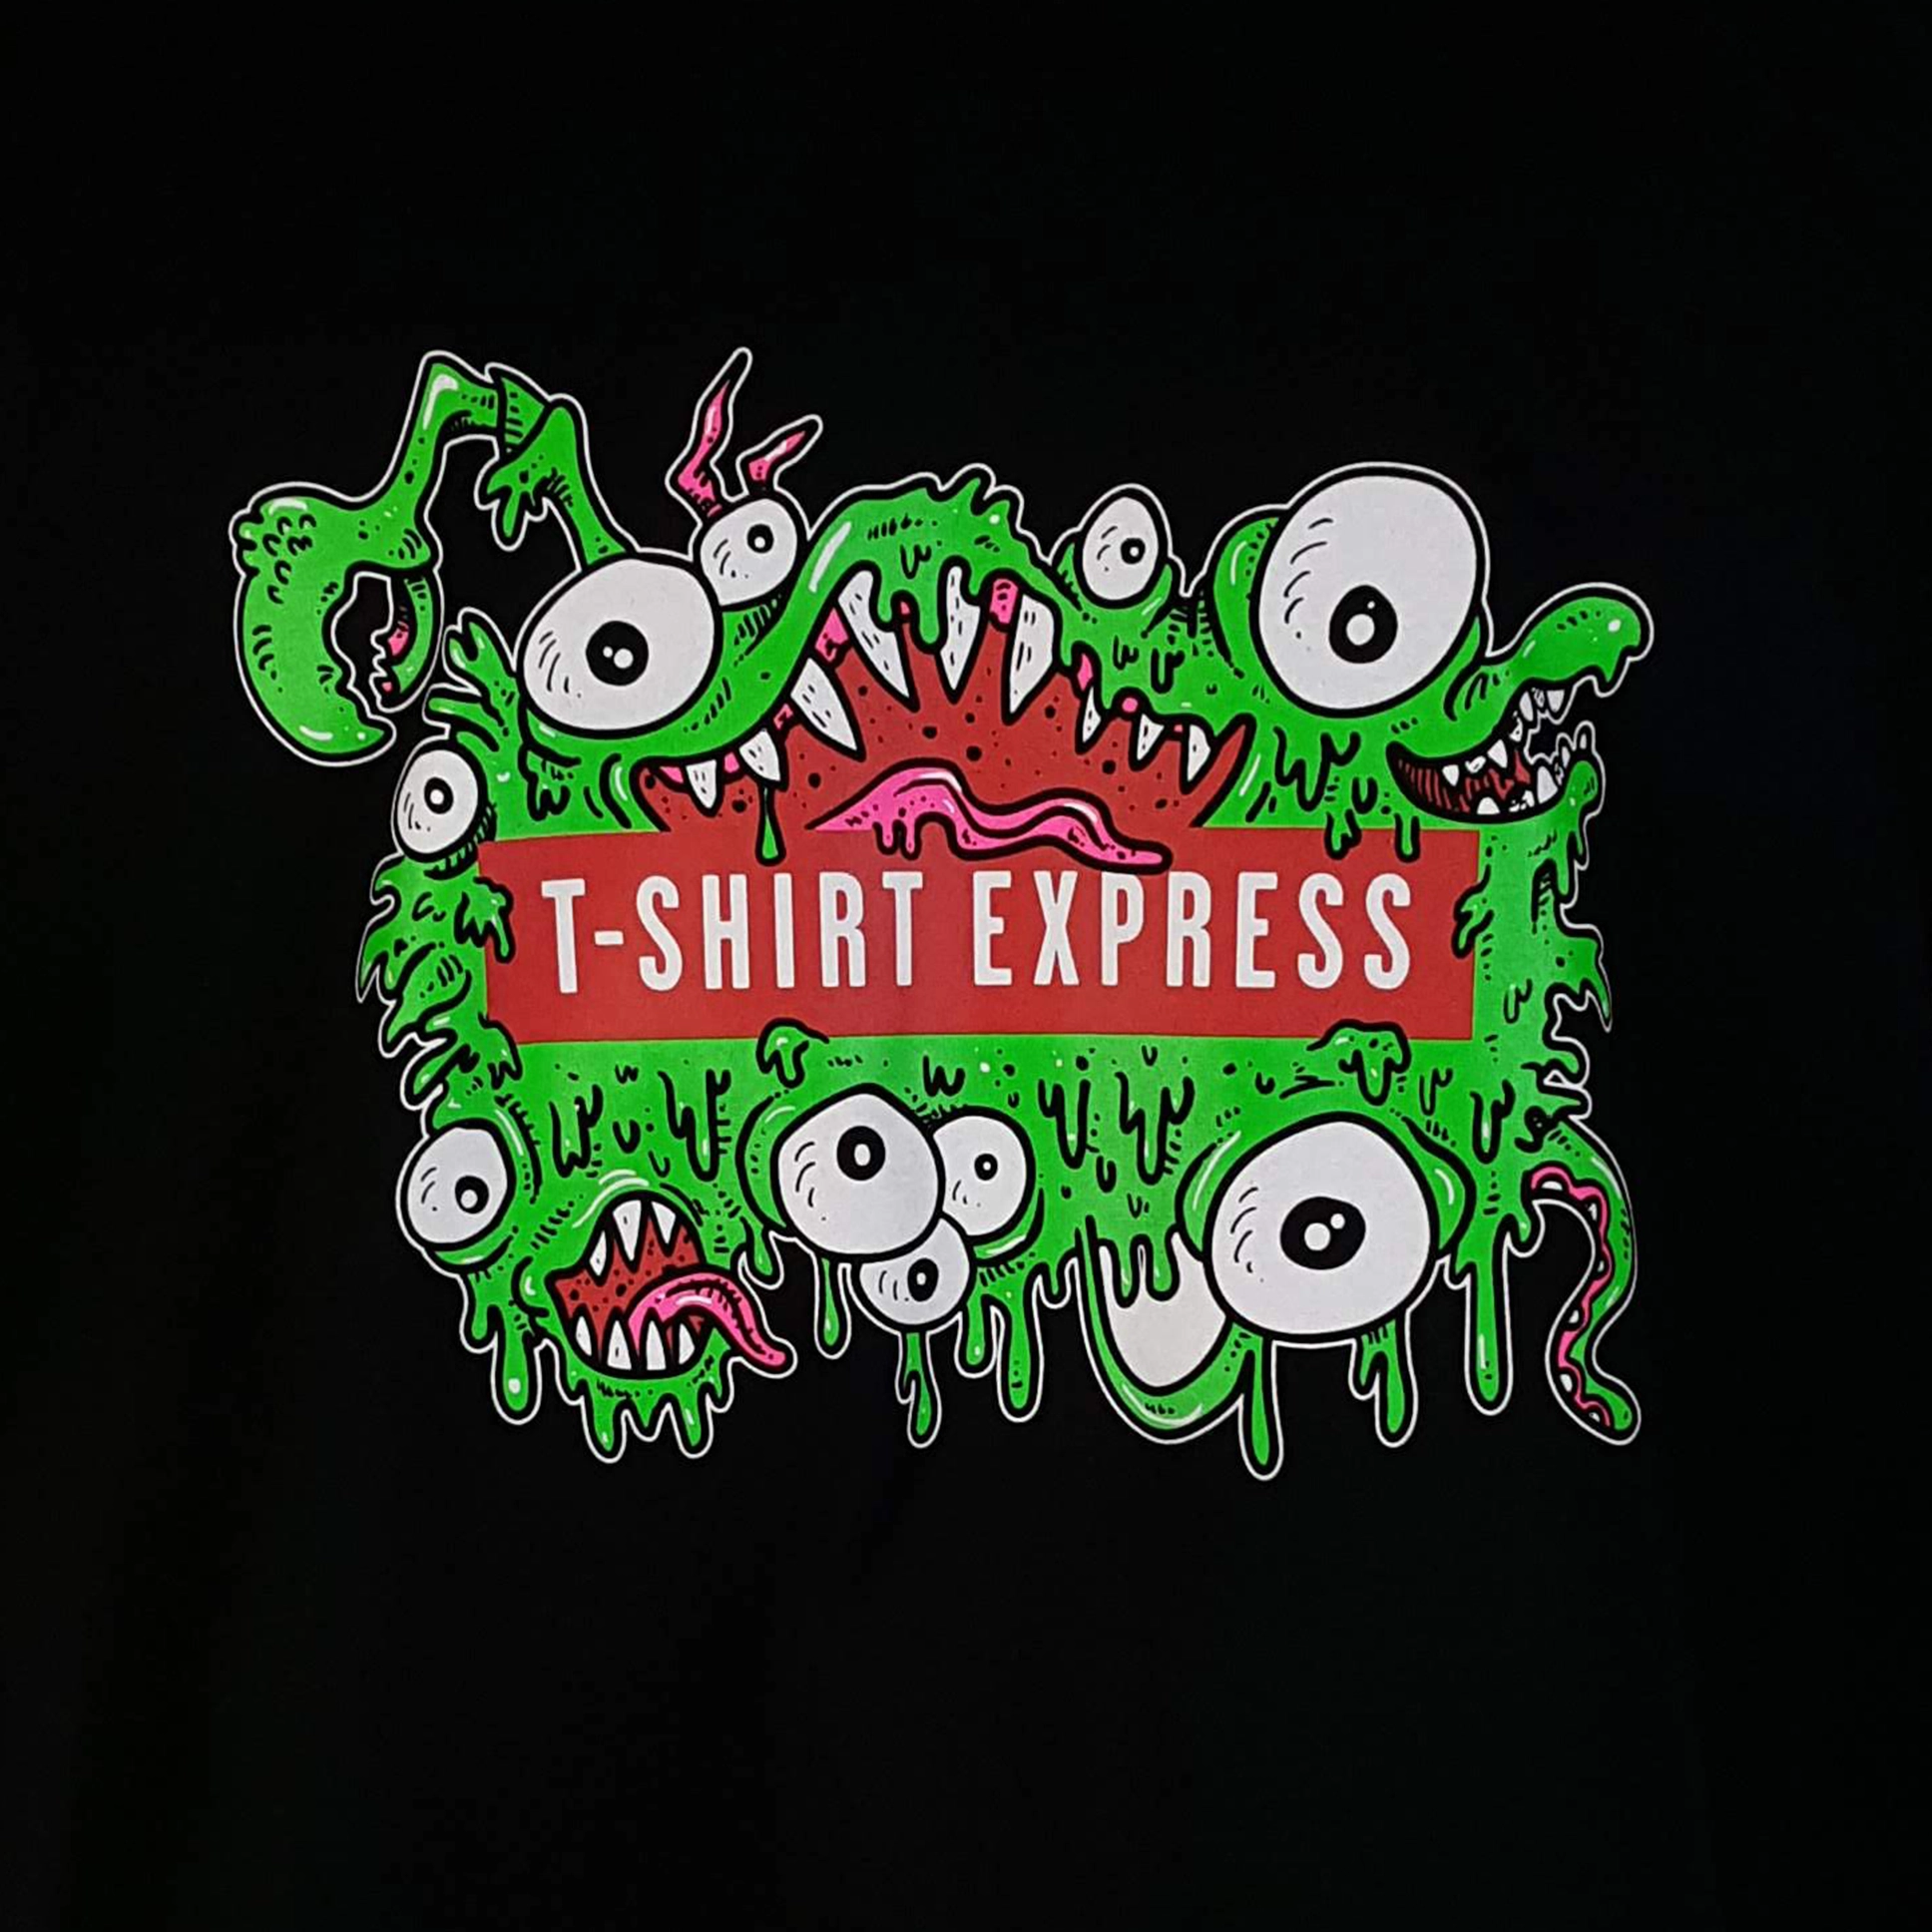 t-shirt express in Mount Vernon ohio